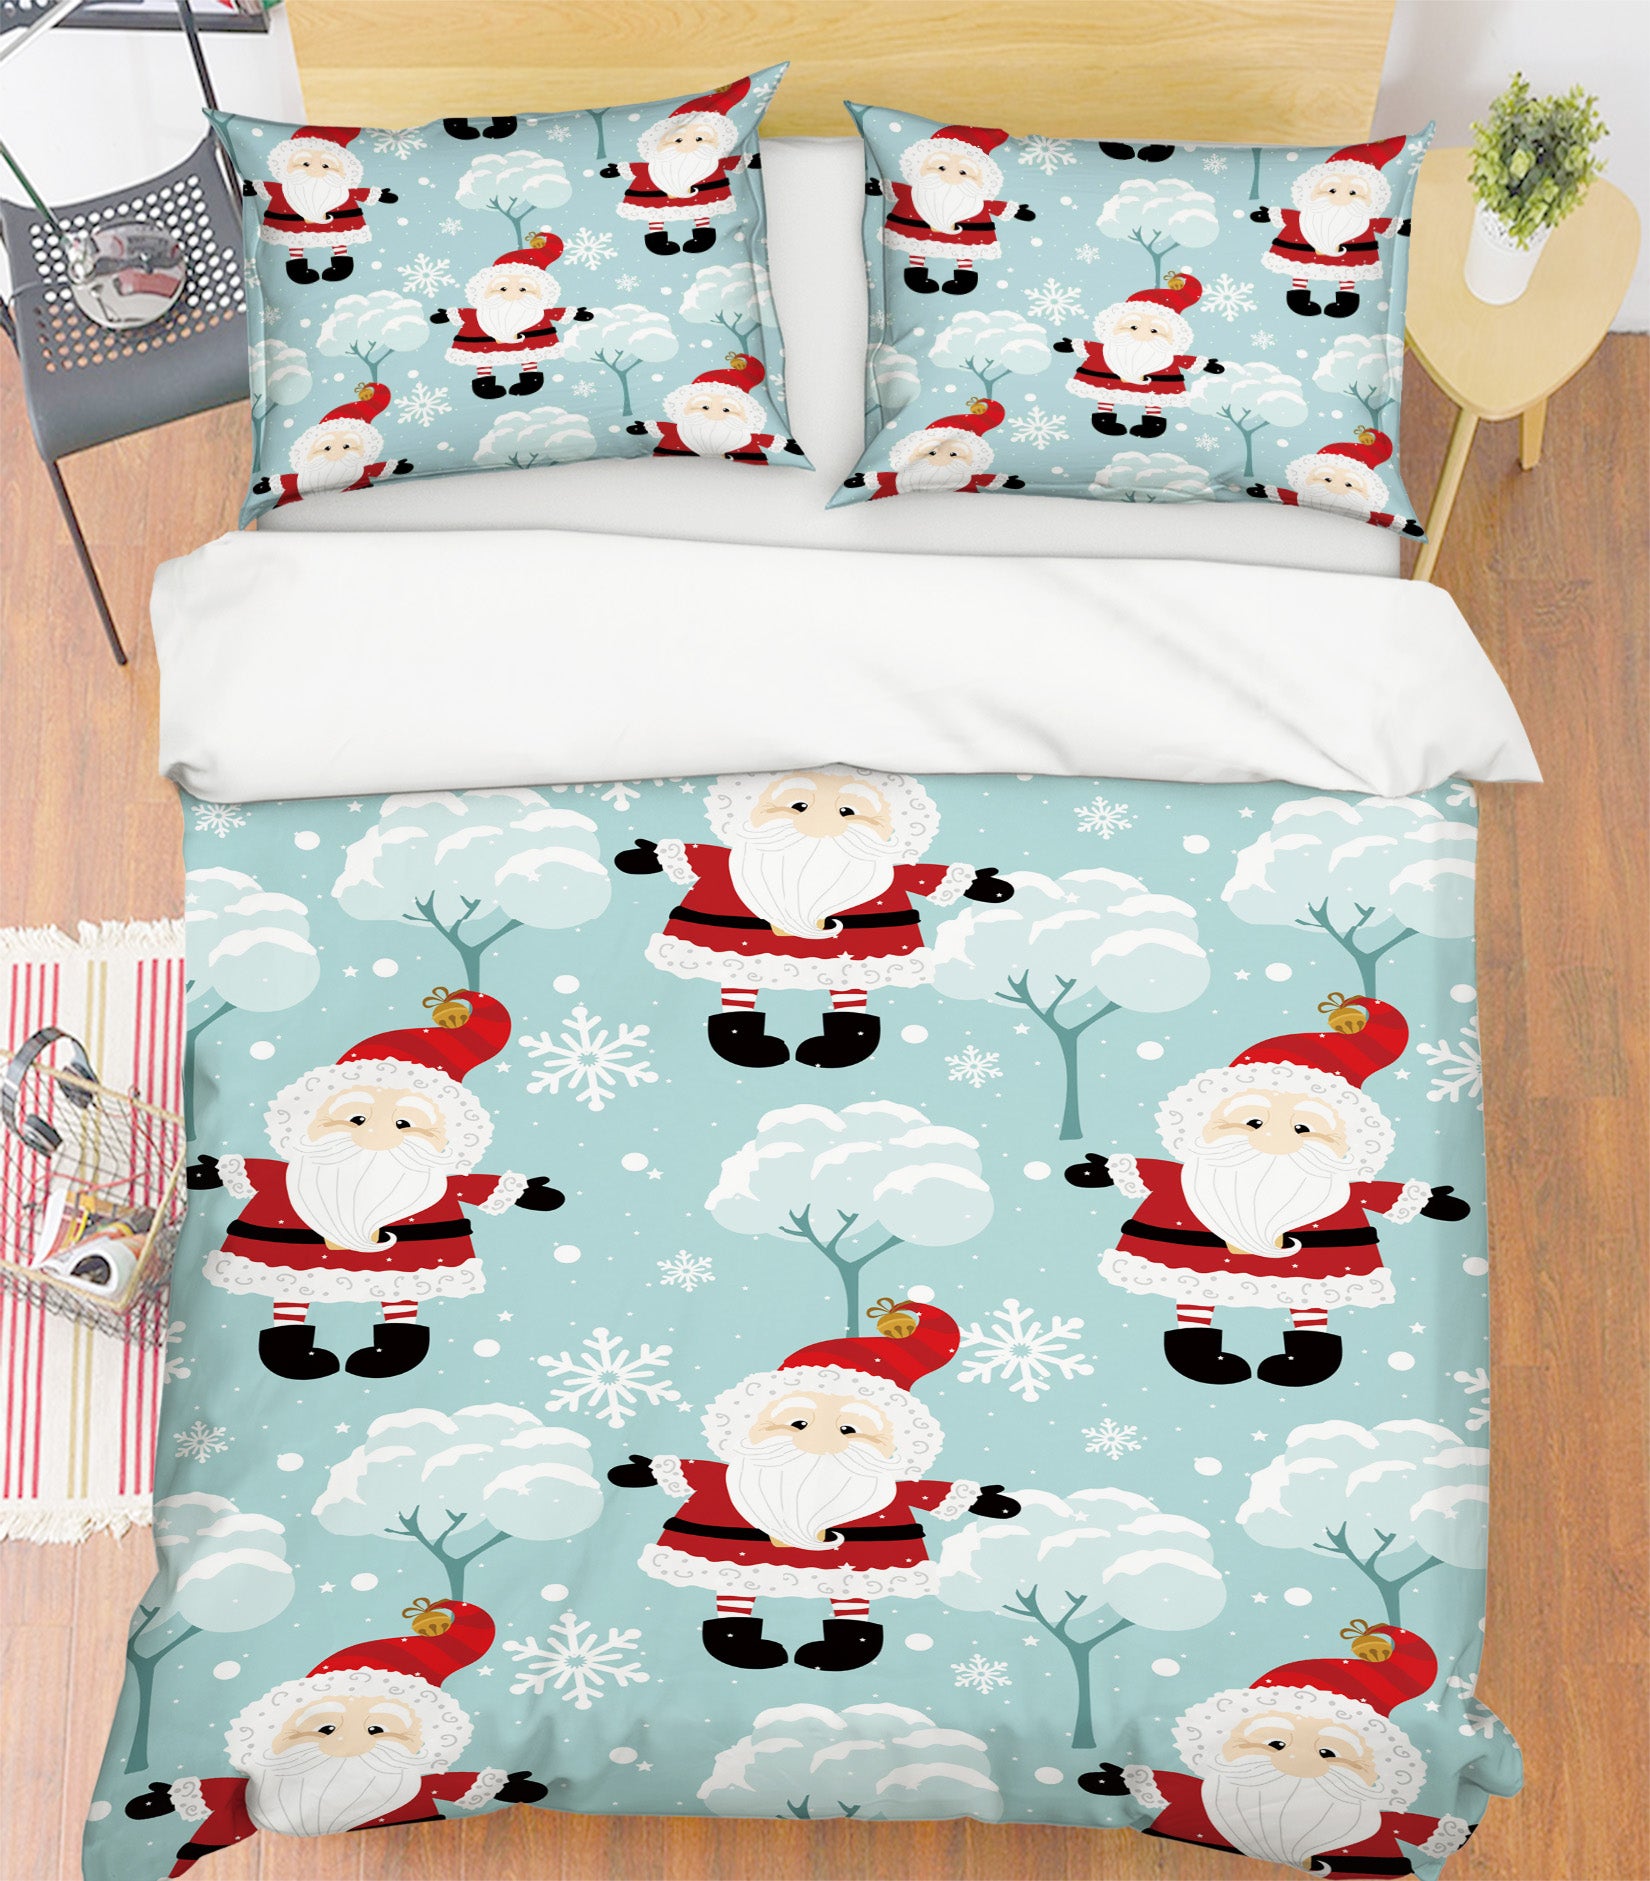 3D Santa Claus Pattern 51118 Christmas Quilt Duvet Cover Xmas Bed Pillowcases